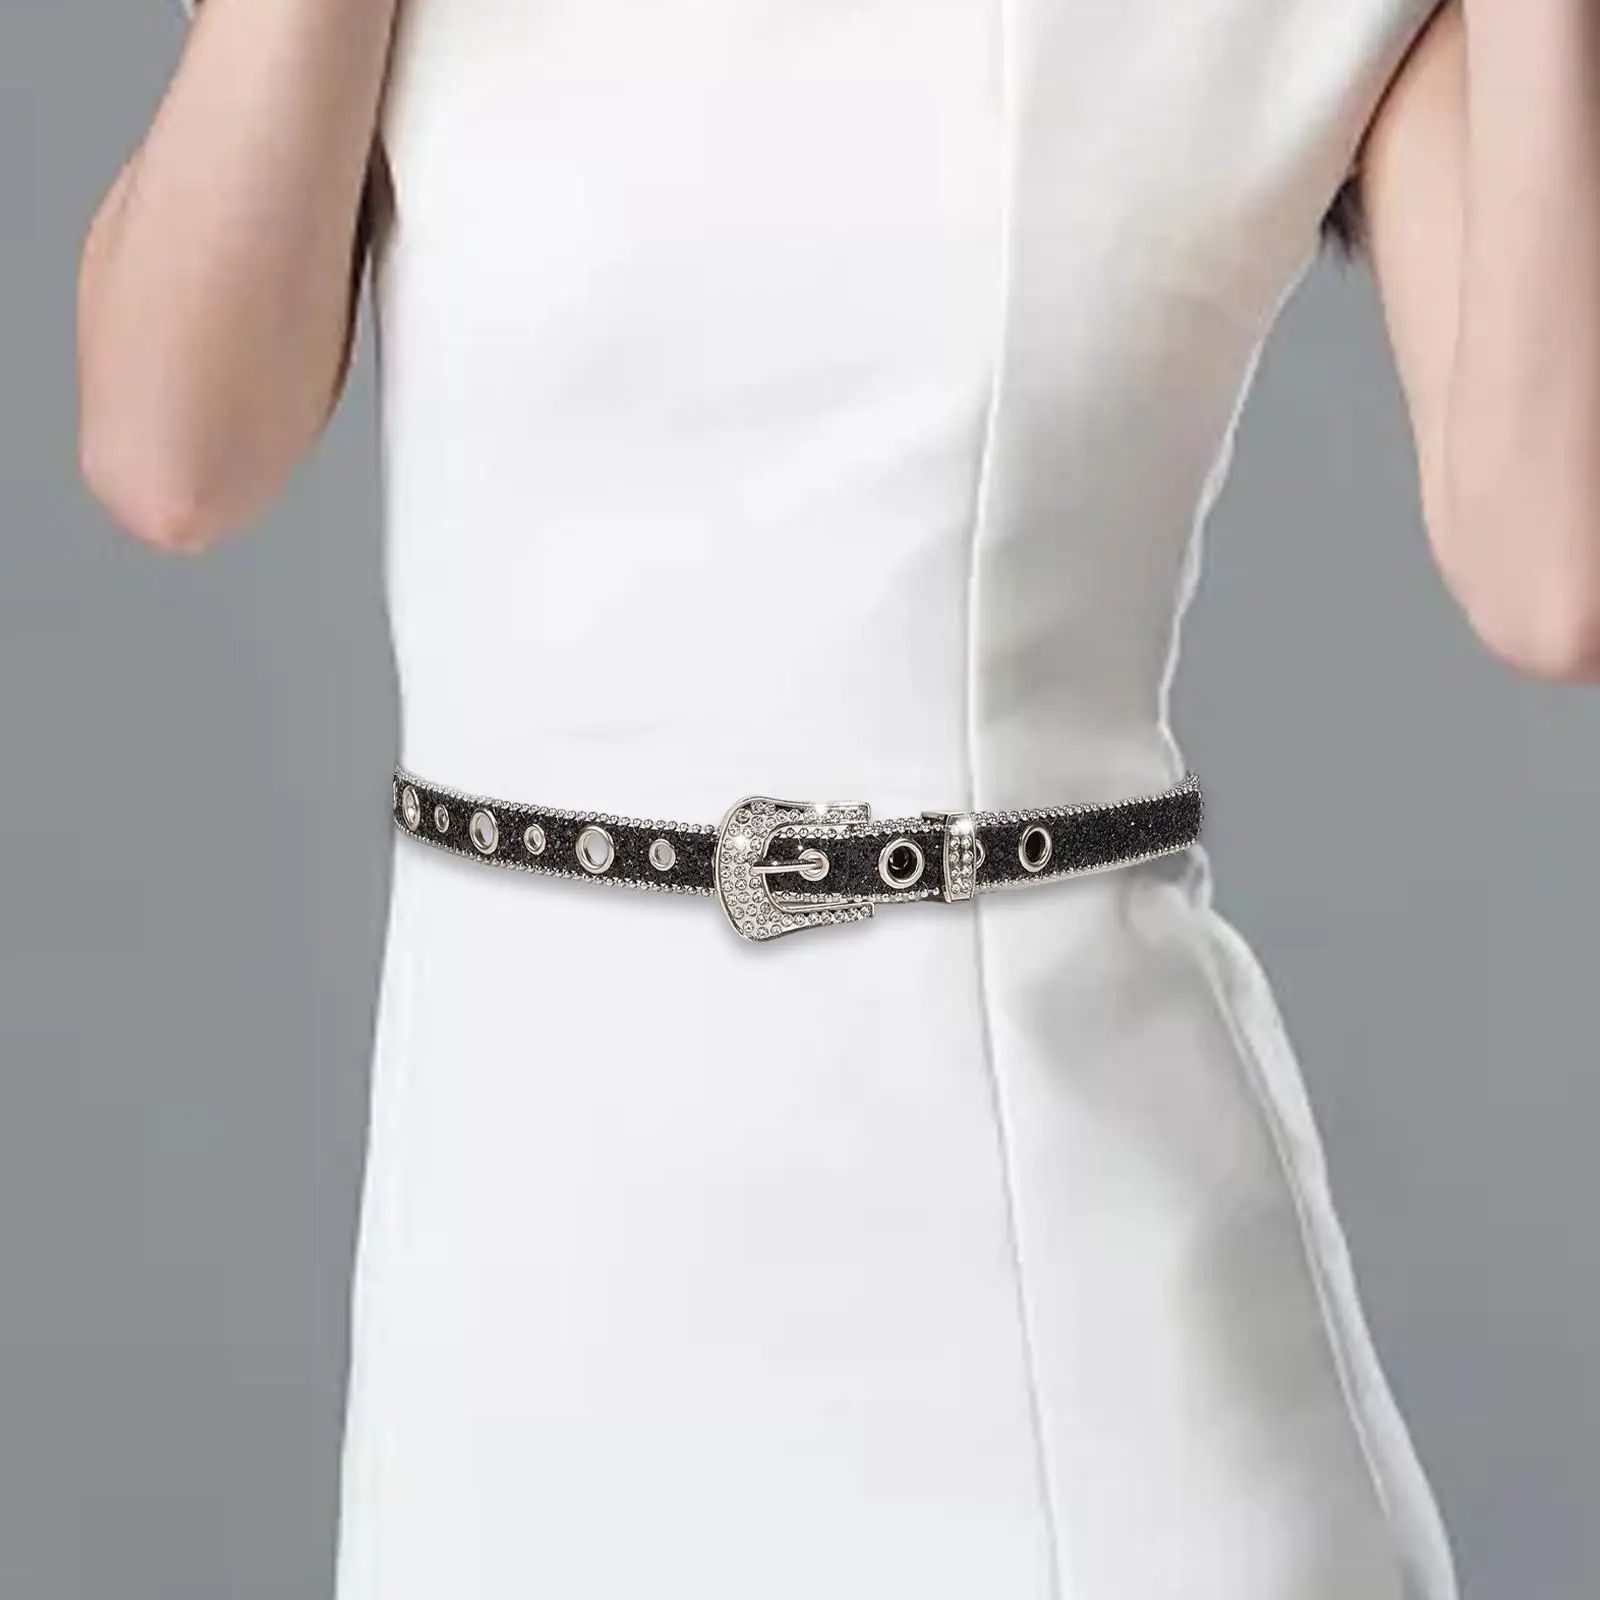 Rhinestone Belt Women PU Leather Waist Belt Eyelet Belt Costume Accessories Adjustable Pin Buckle Waistband for Party Trousers